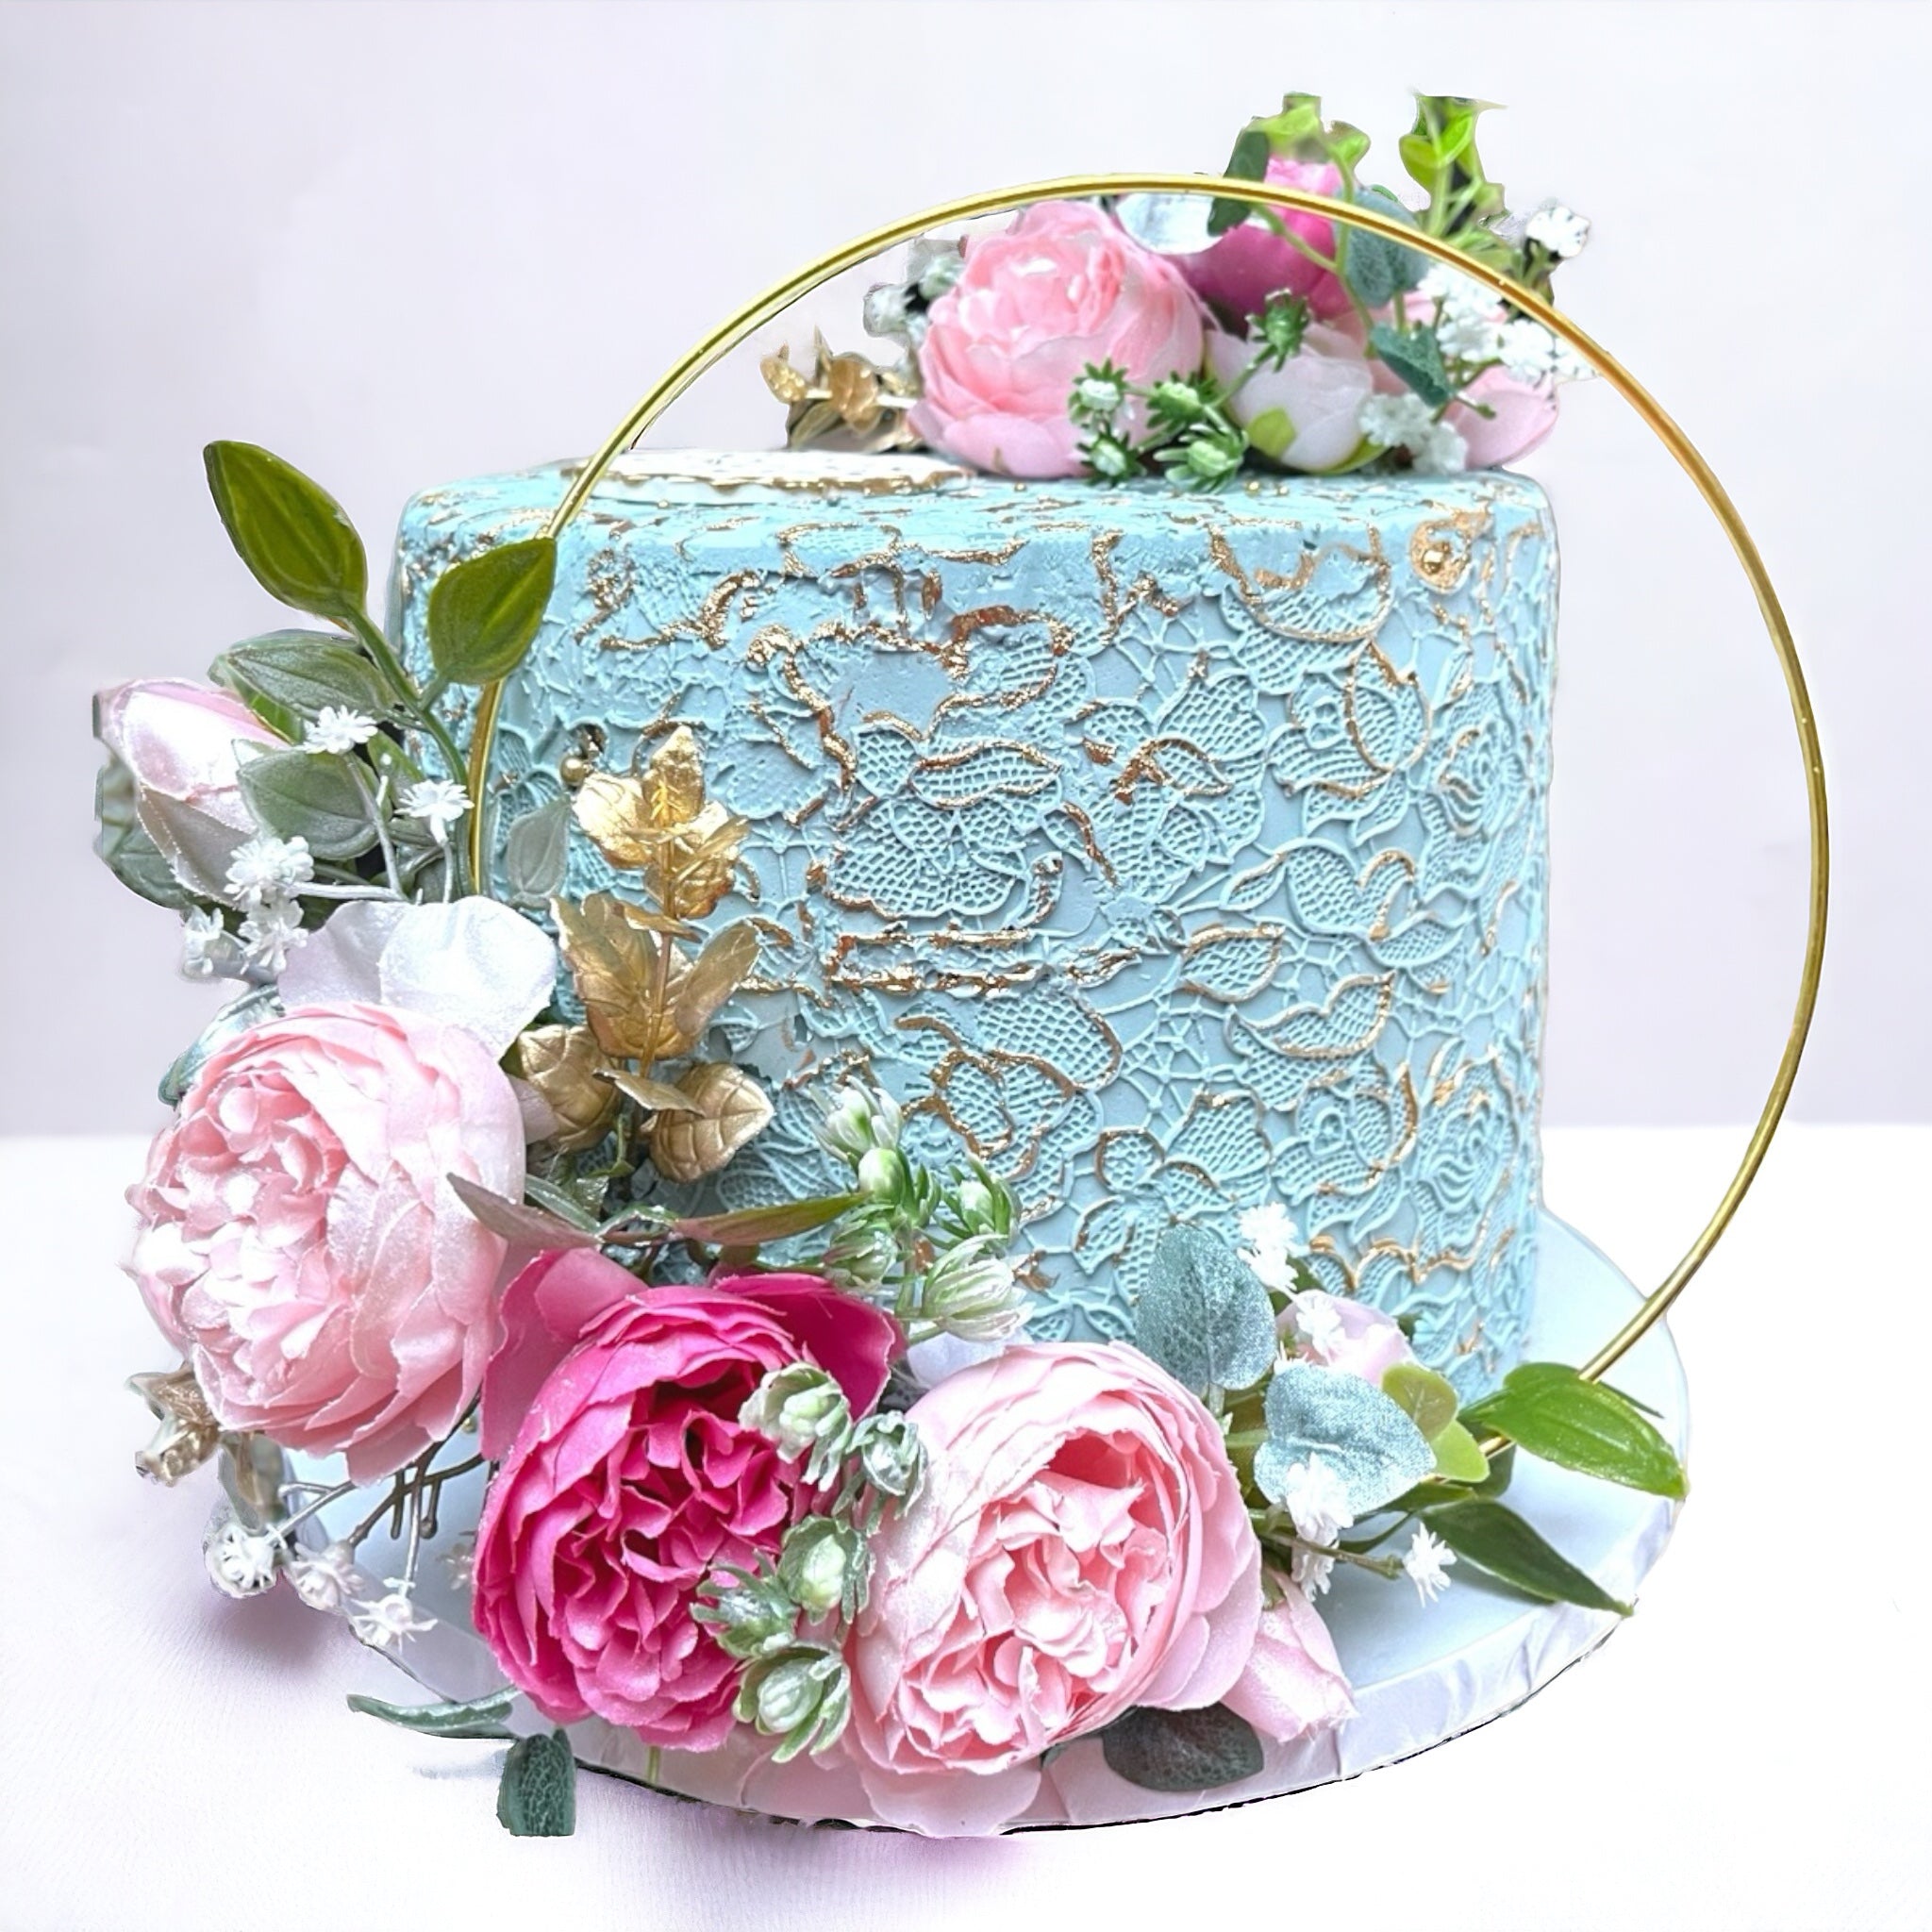 Birthday cake with flowers 